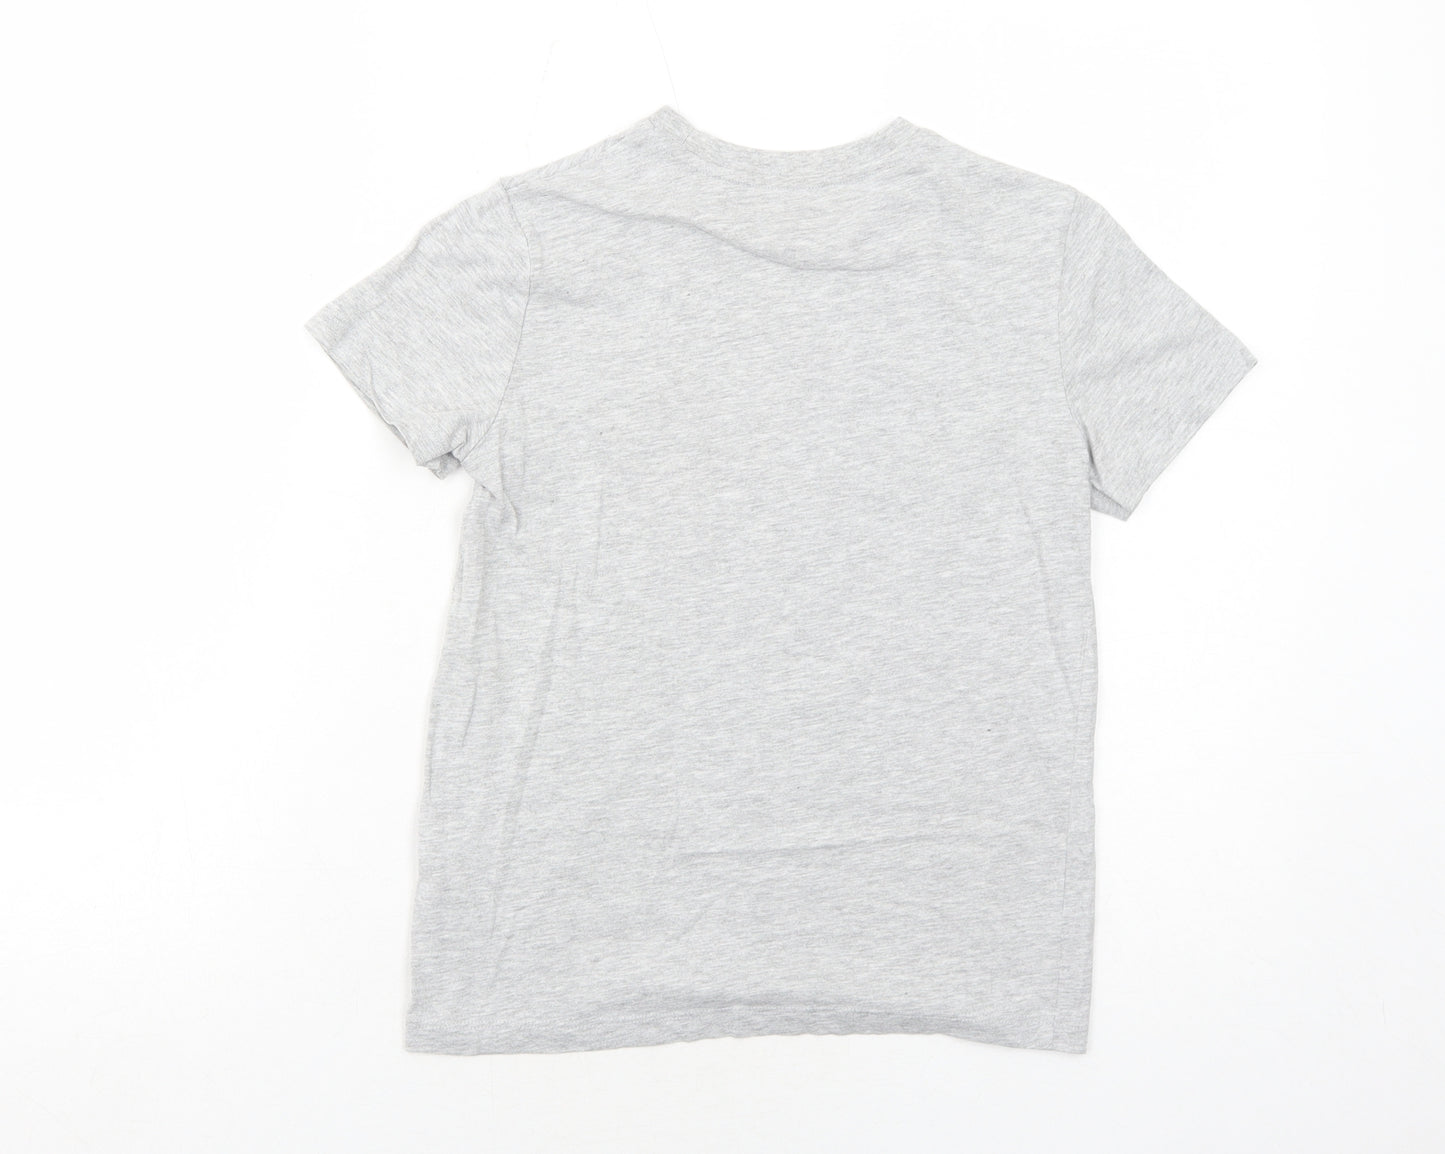 NEXT Boys Grey Cotton Basic T-Shirt Size 9 Years Round Neck Pullover